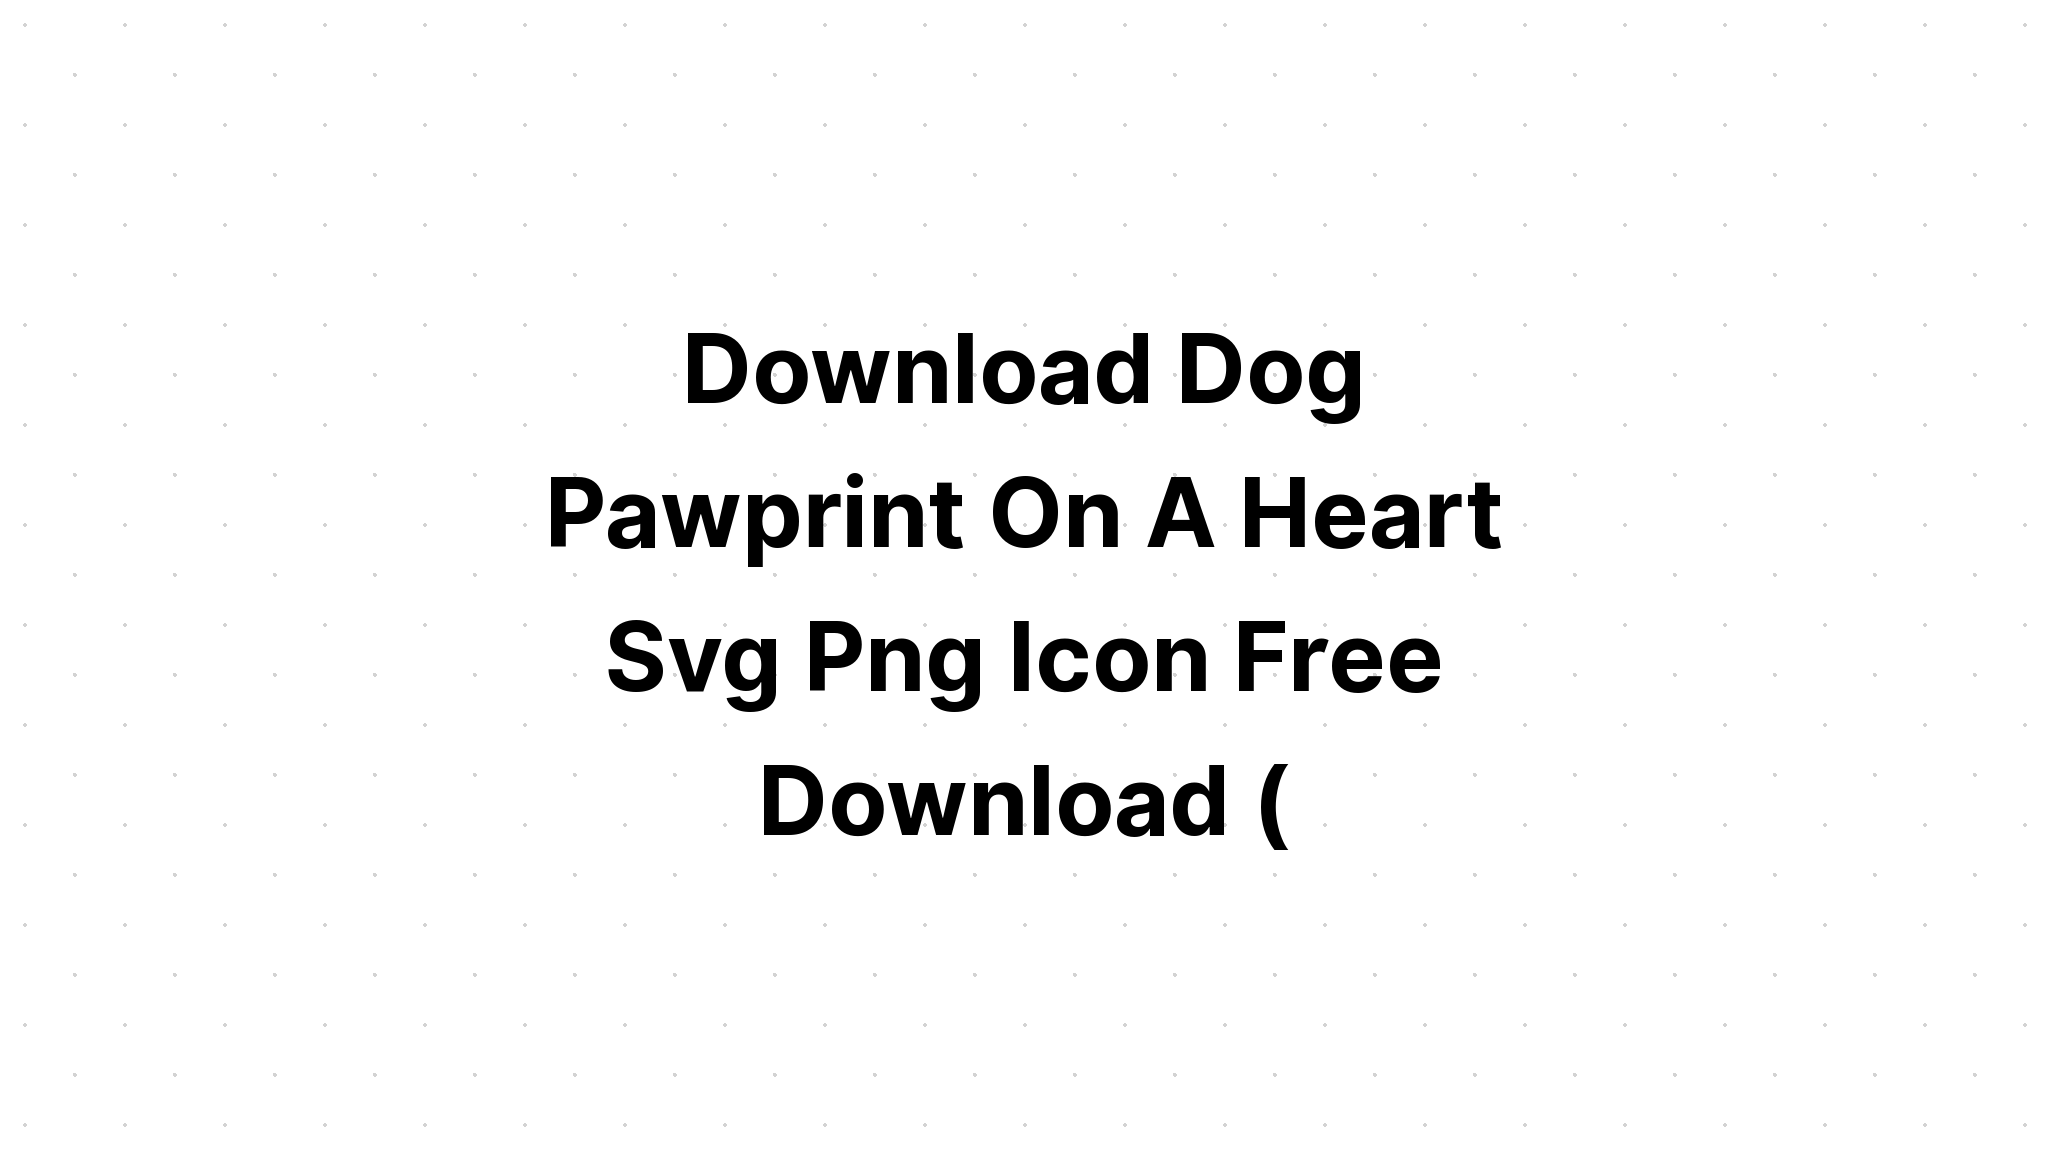 Download Pawprint Svg Free - Layered SVG Cut File